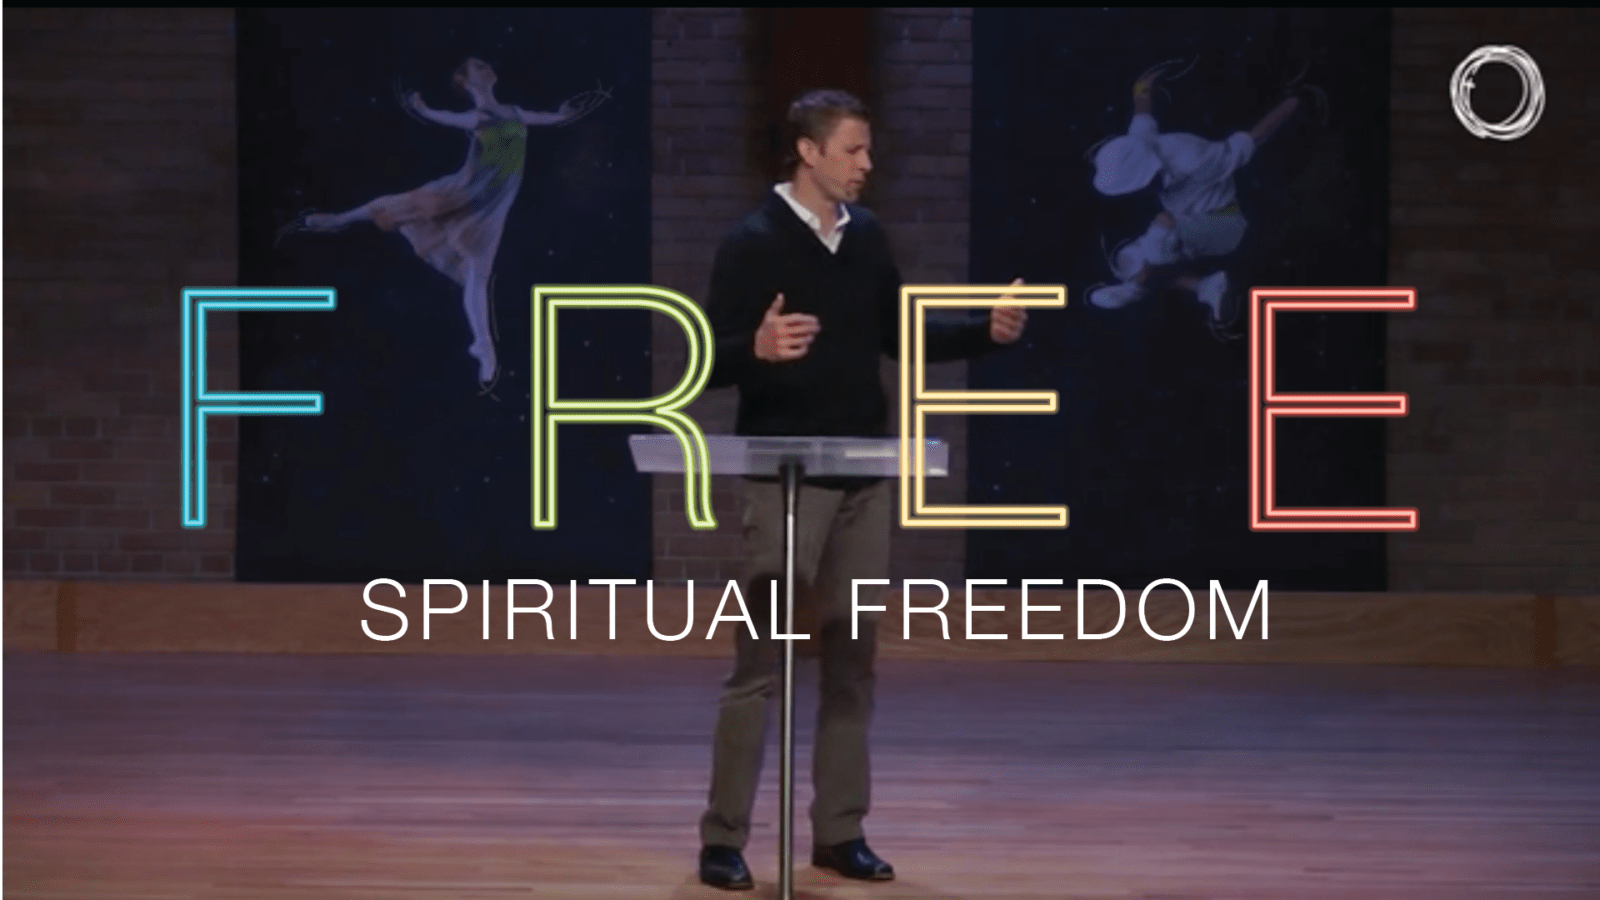 Spiritual Freedom